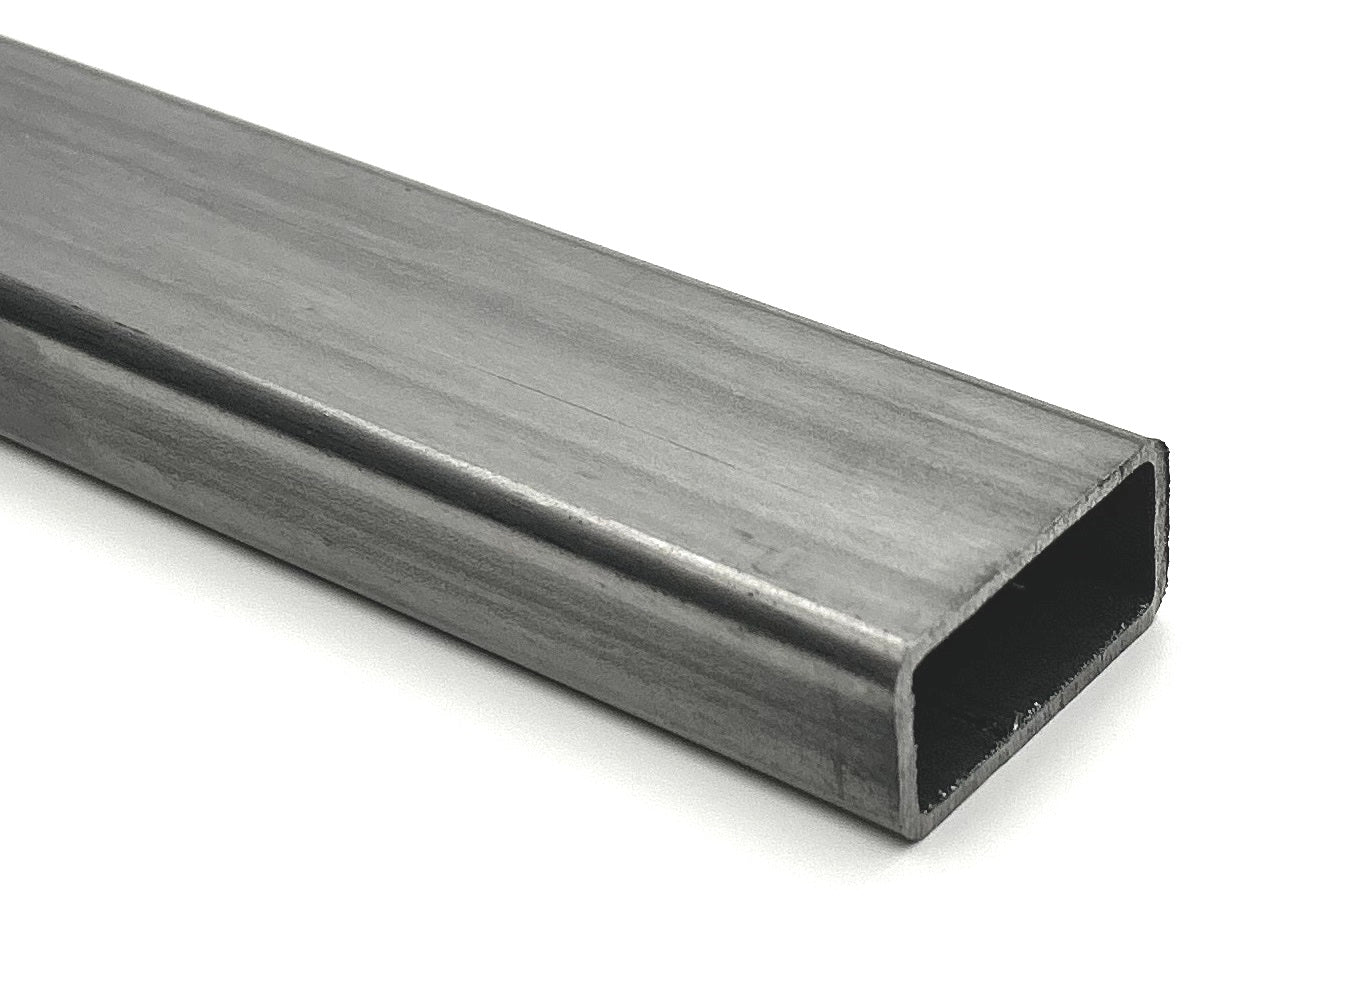 Sort stål - Rektangulært rør 50x20mm